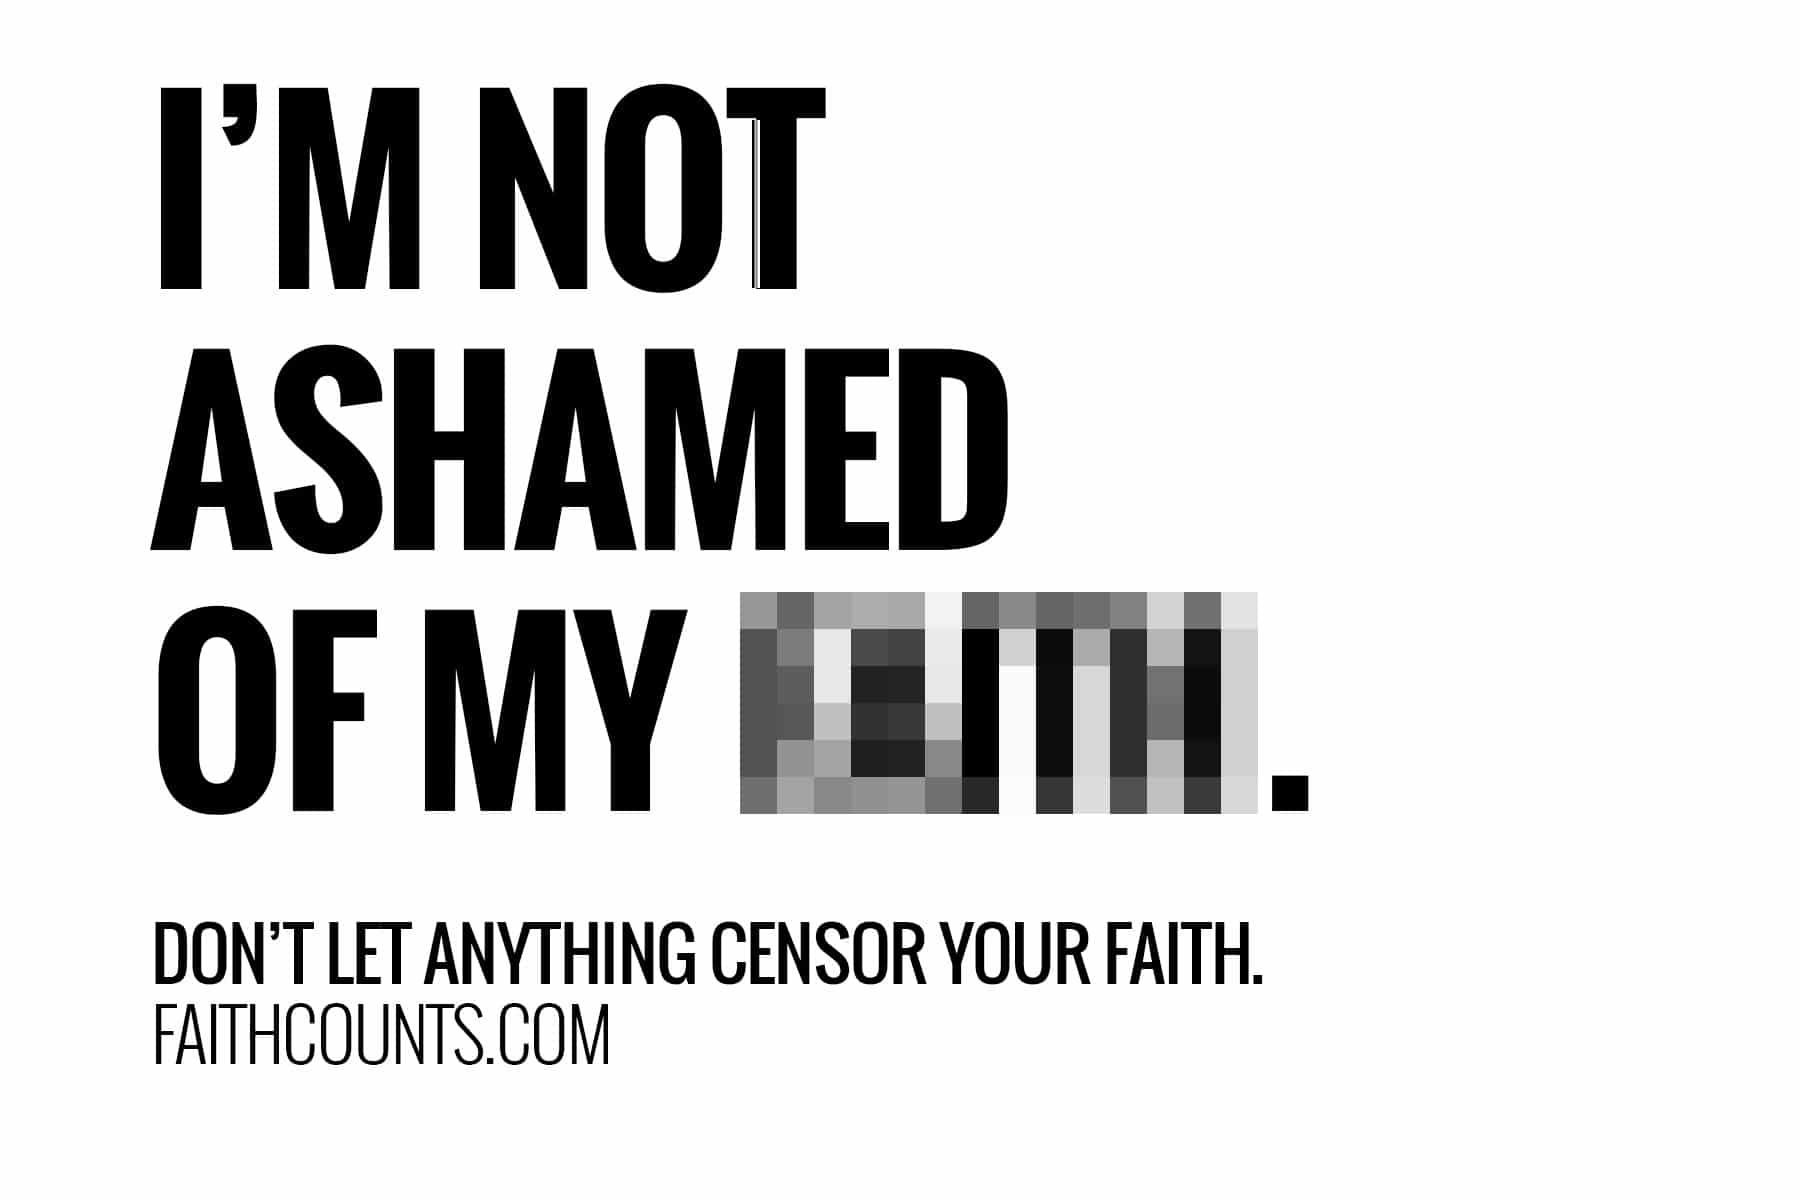 I'm not ashamed of my faith. Don't let anything censor your faith.